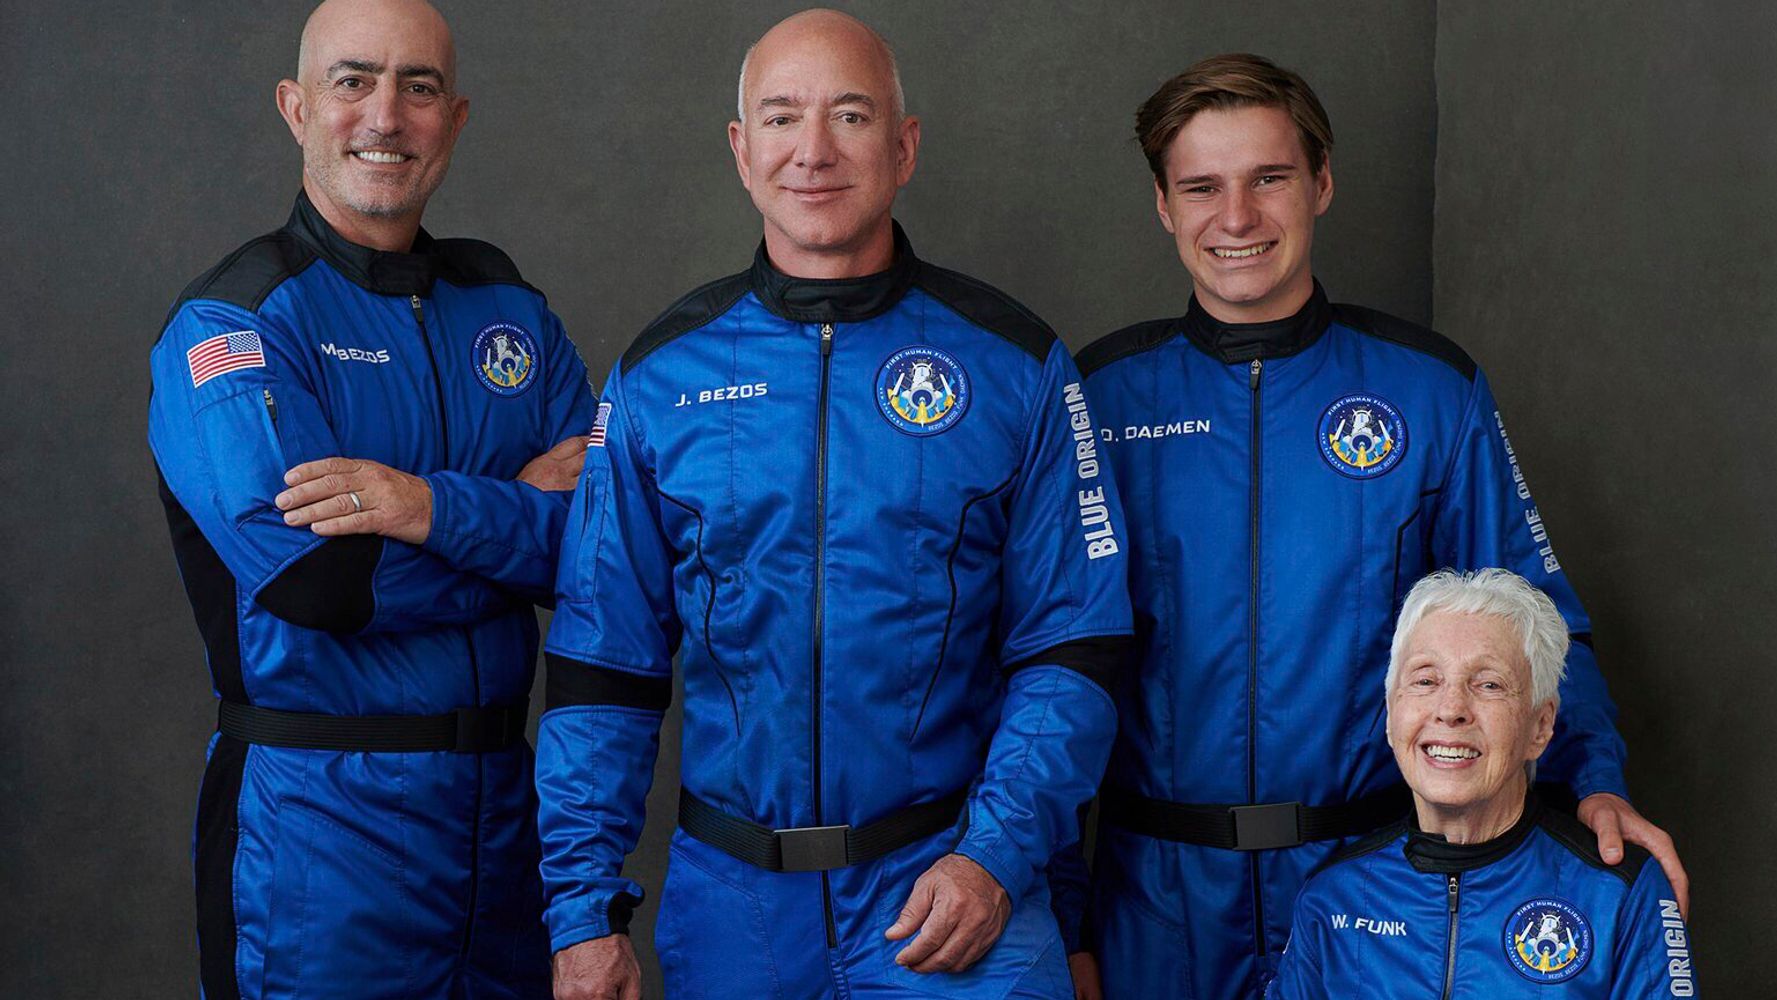 Jeff Bezos Blasts Into Space With Travel Company Blue Origin